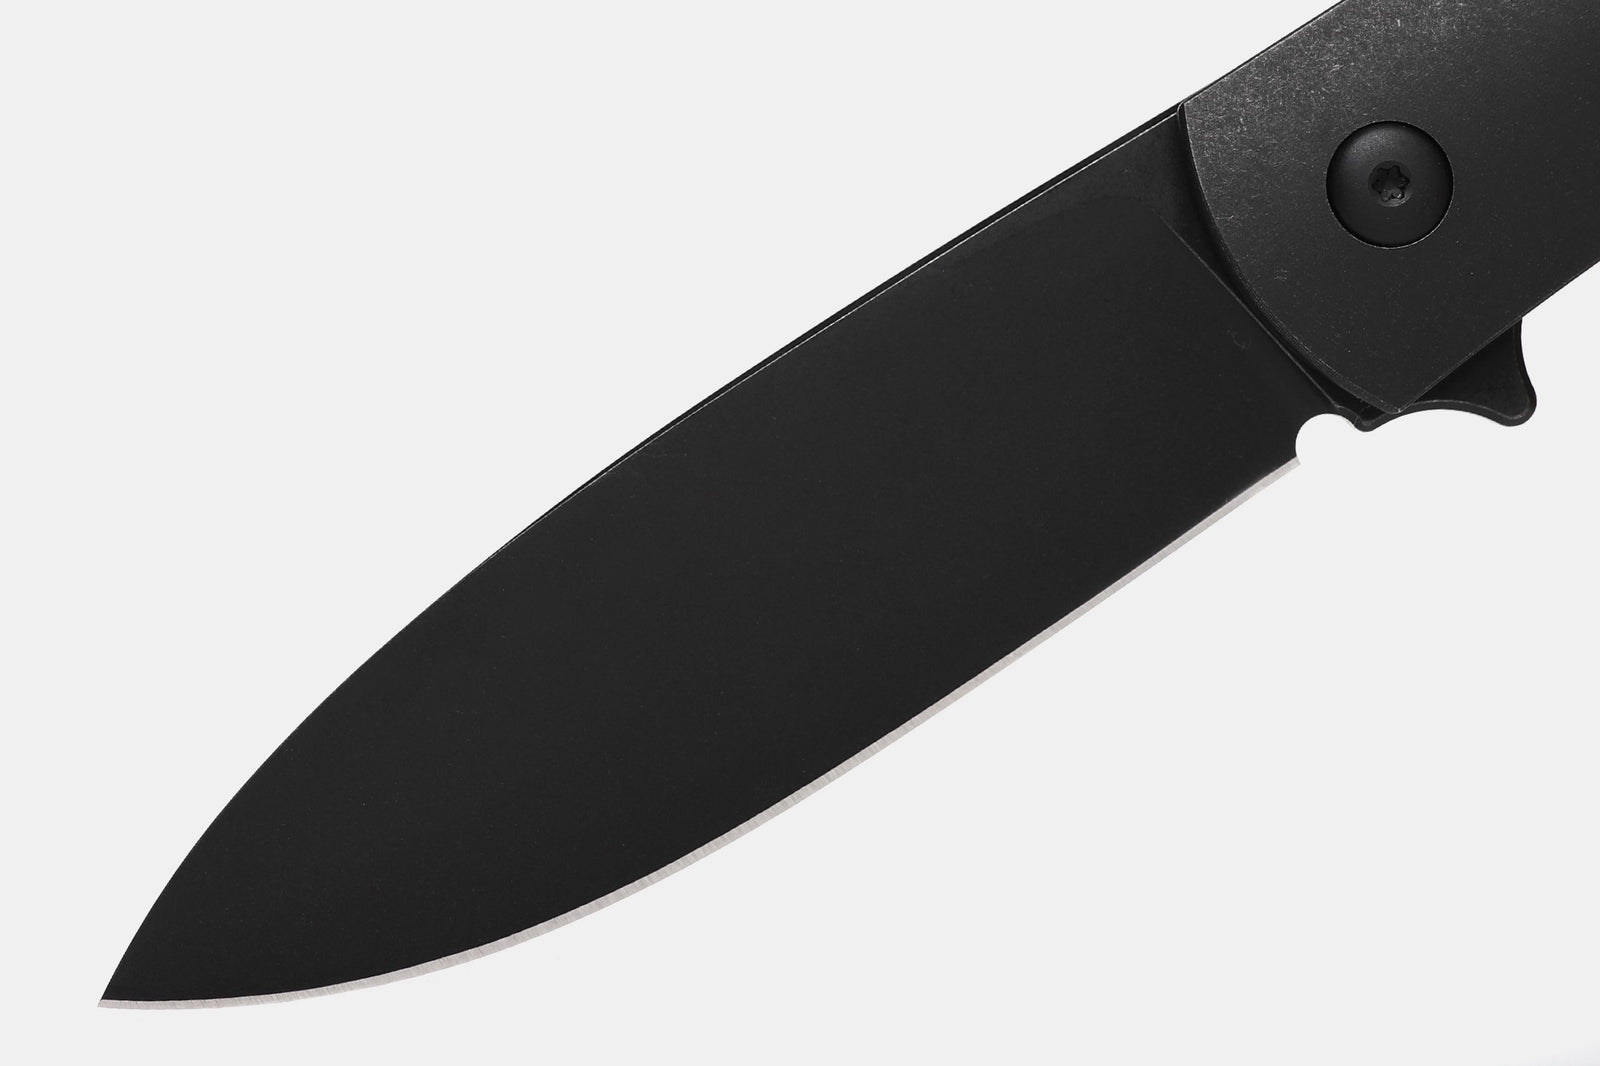 Kaviso x Laconico Keen Folding Knife CPM S35VN Blade Steel Titanium Frame Lock Spear Point Pocket Knife by Ray Laconico with Flipper Tab in Black